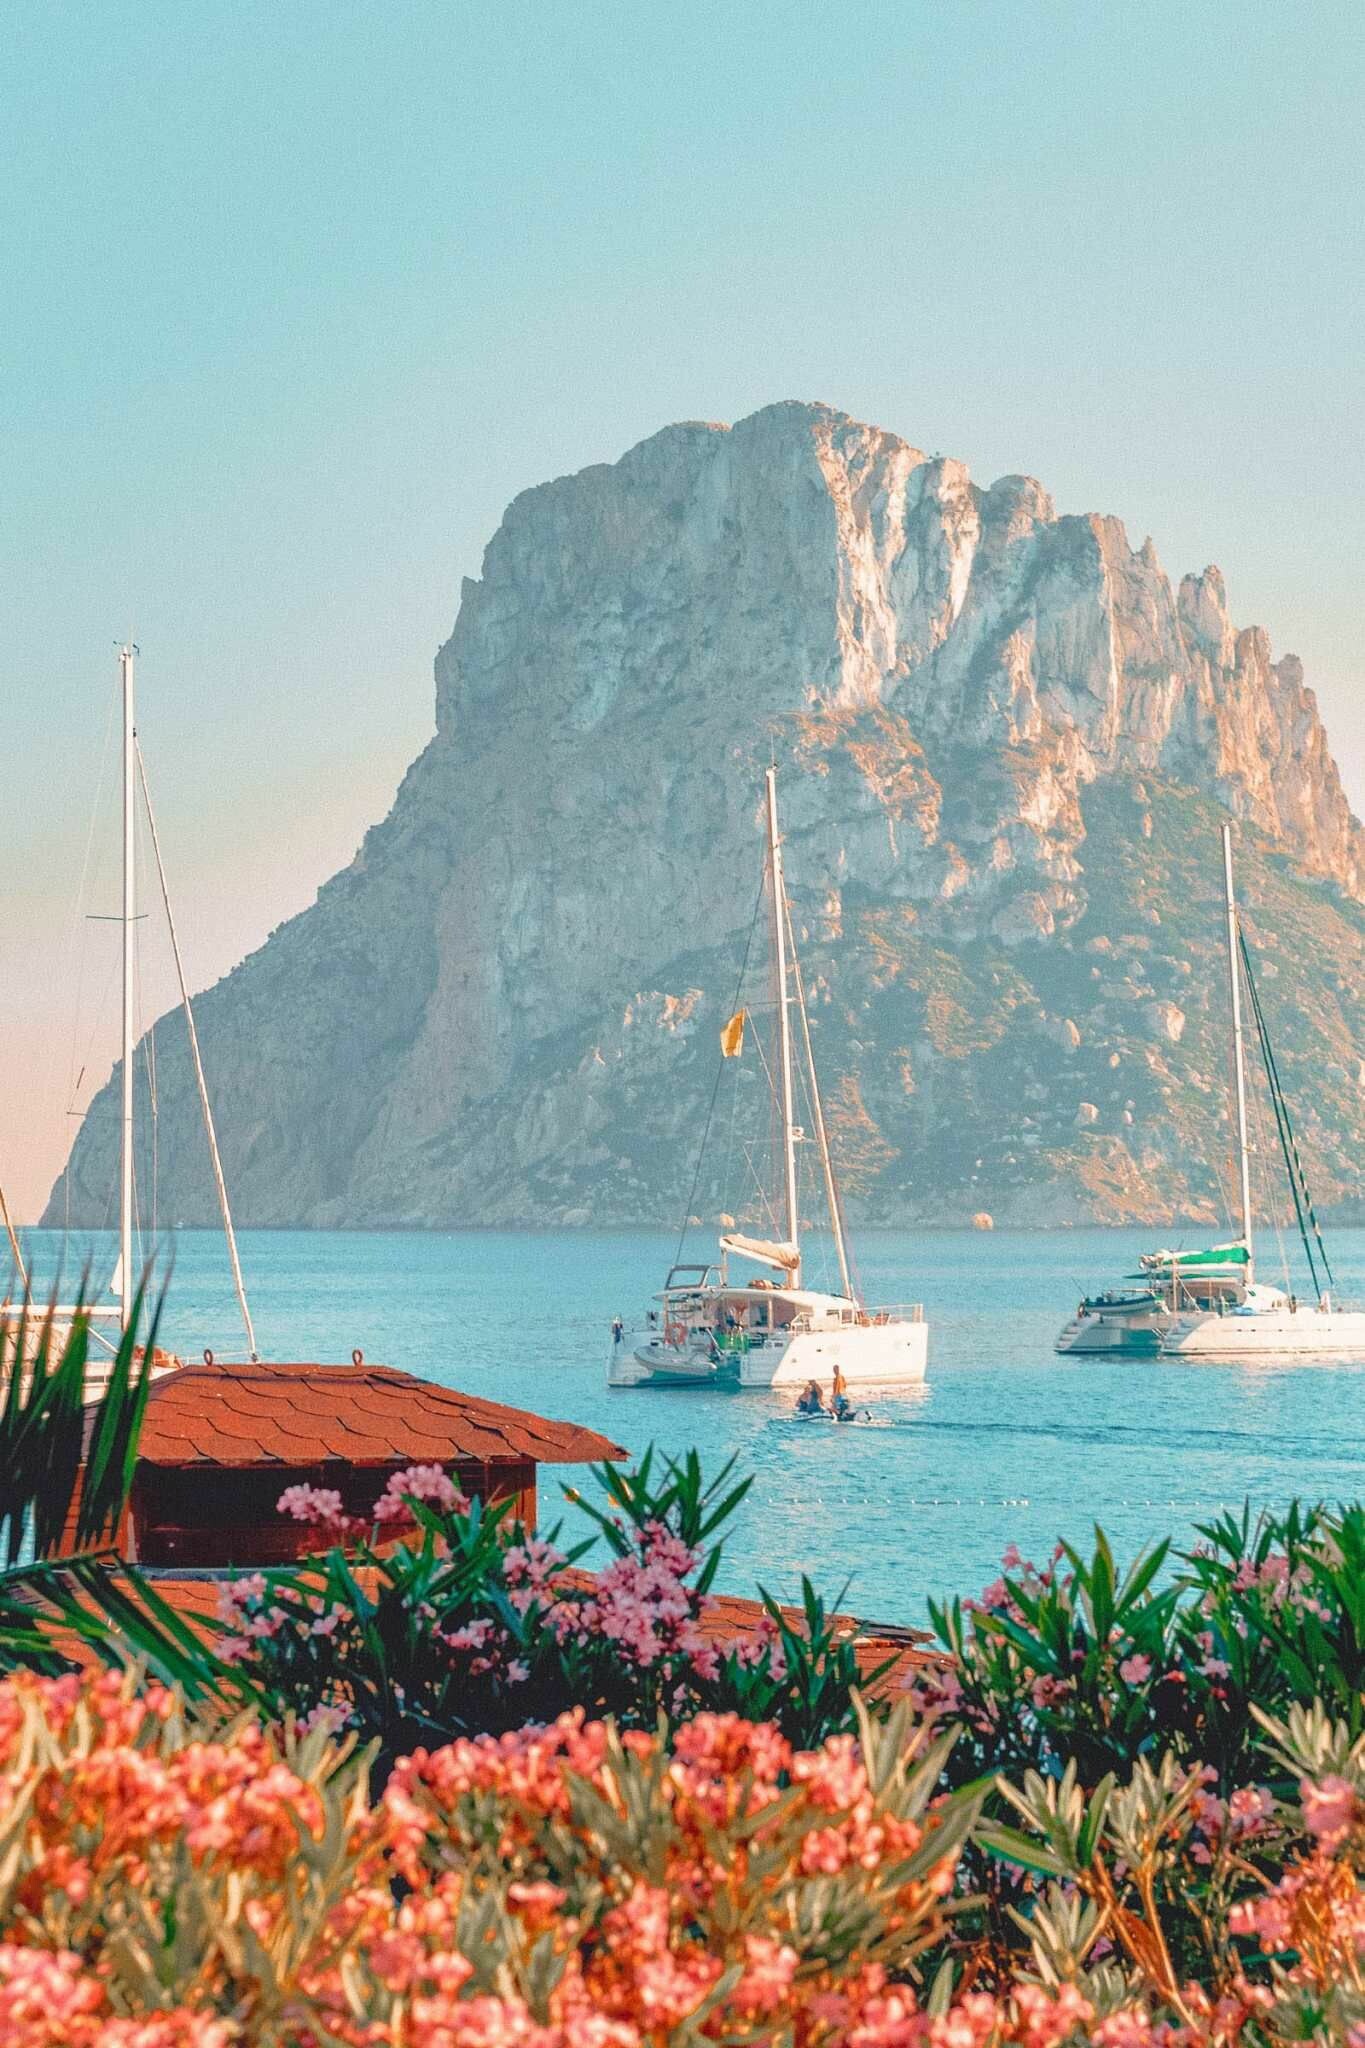 Ibiza: One of Spain's Balearic Islands, an archipelago in the Mediterranean Sea. 1370x2050 HD Wallpaper.